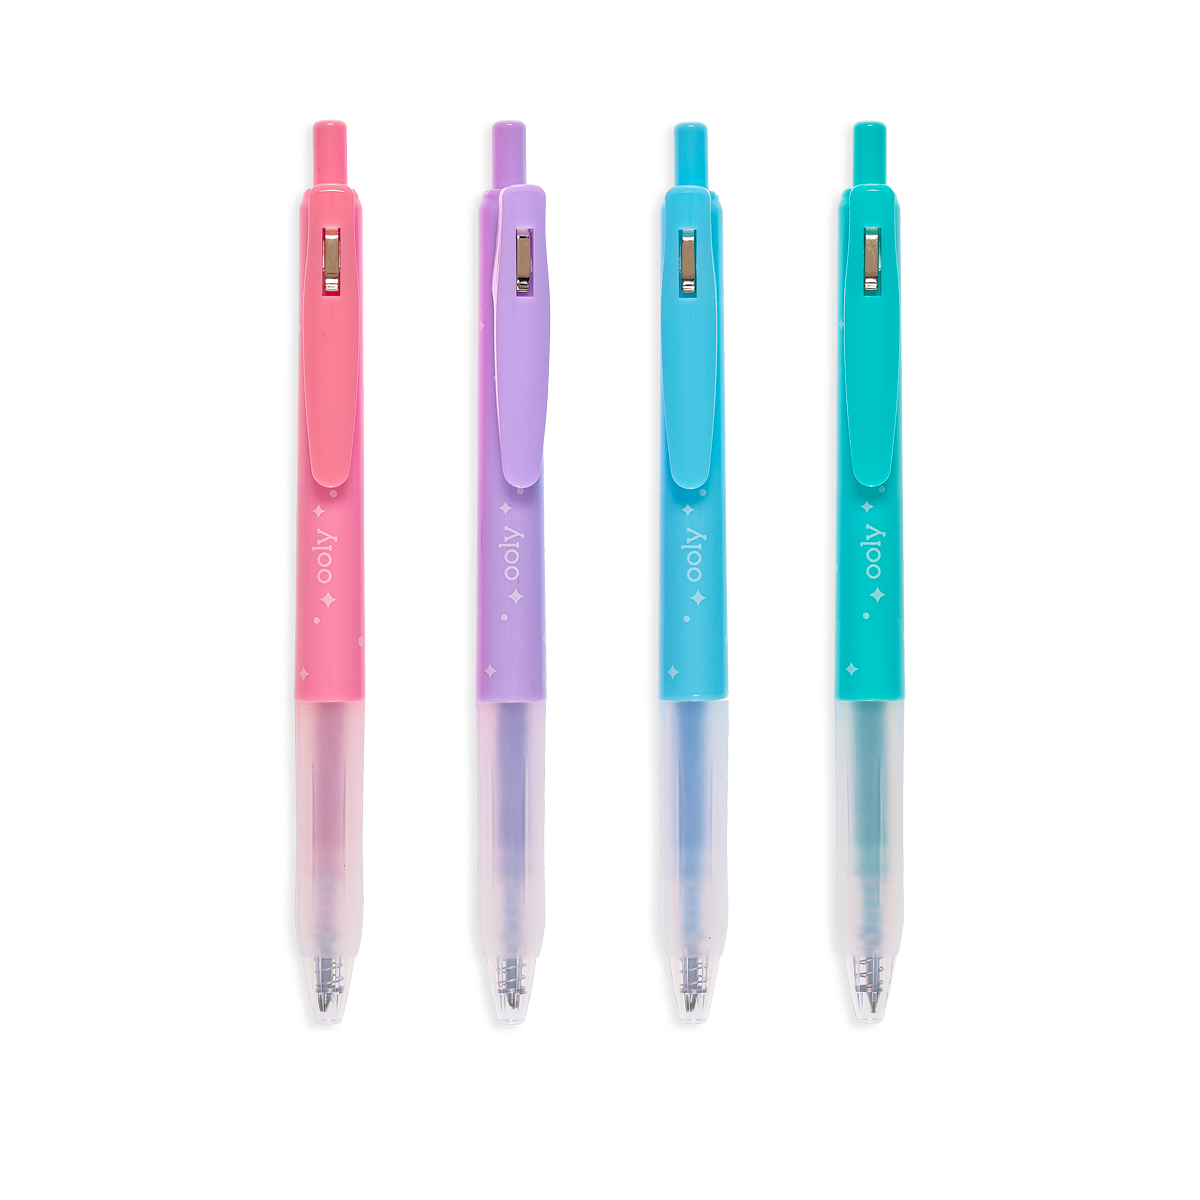 Colored Gel Pens, 1 Coloring Book - Set of 130